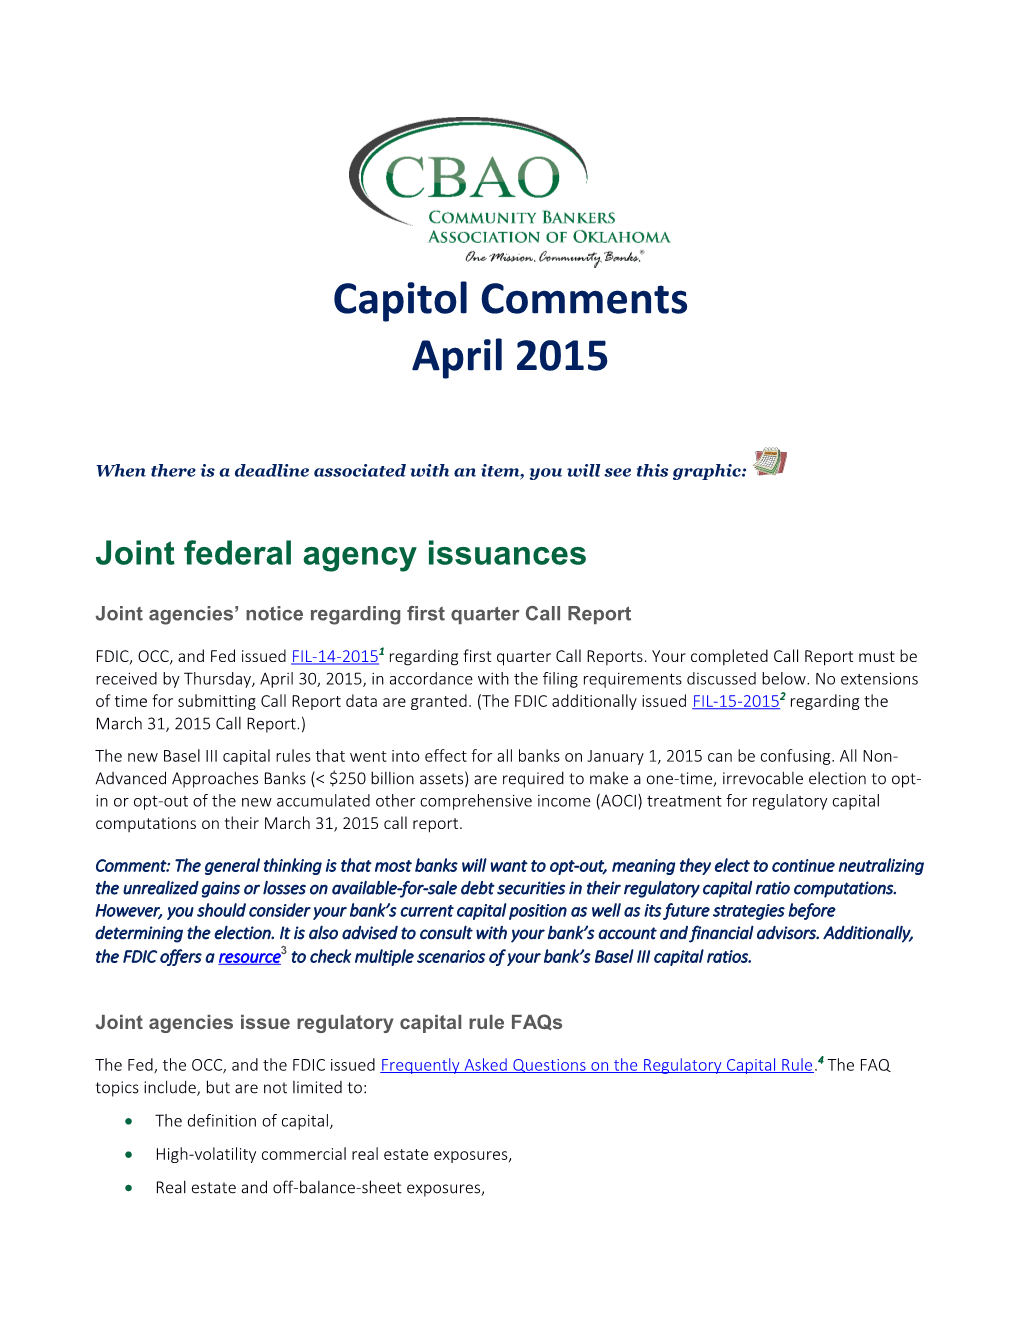 Joint Agencies Notice Regarding First Quarter Call Report